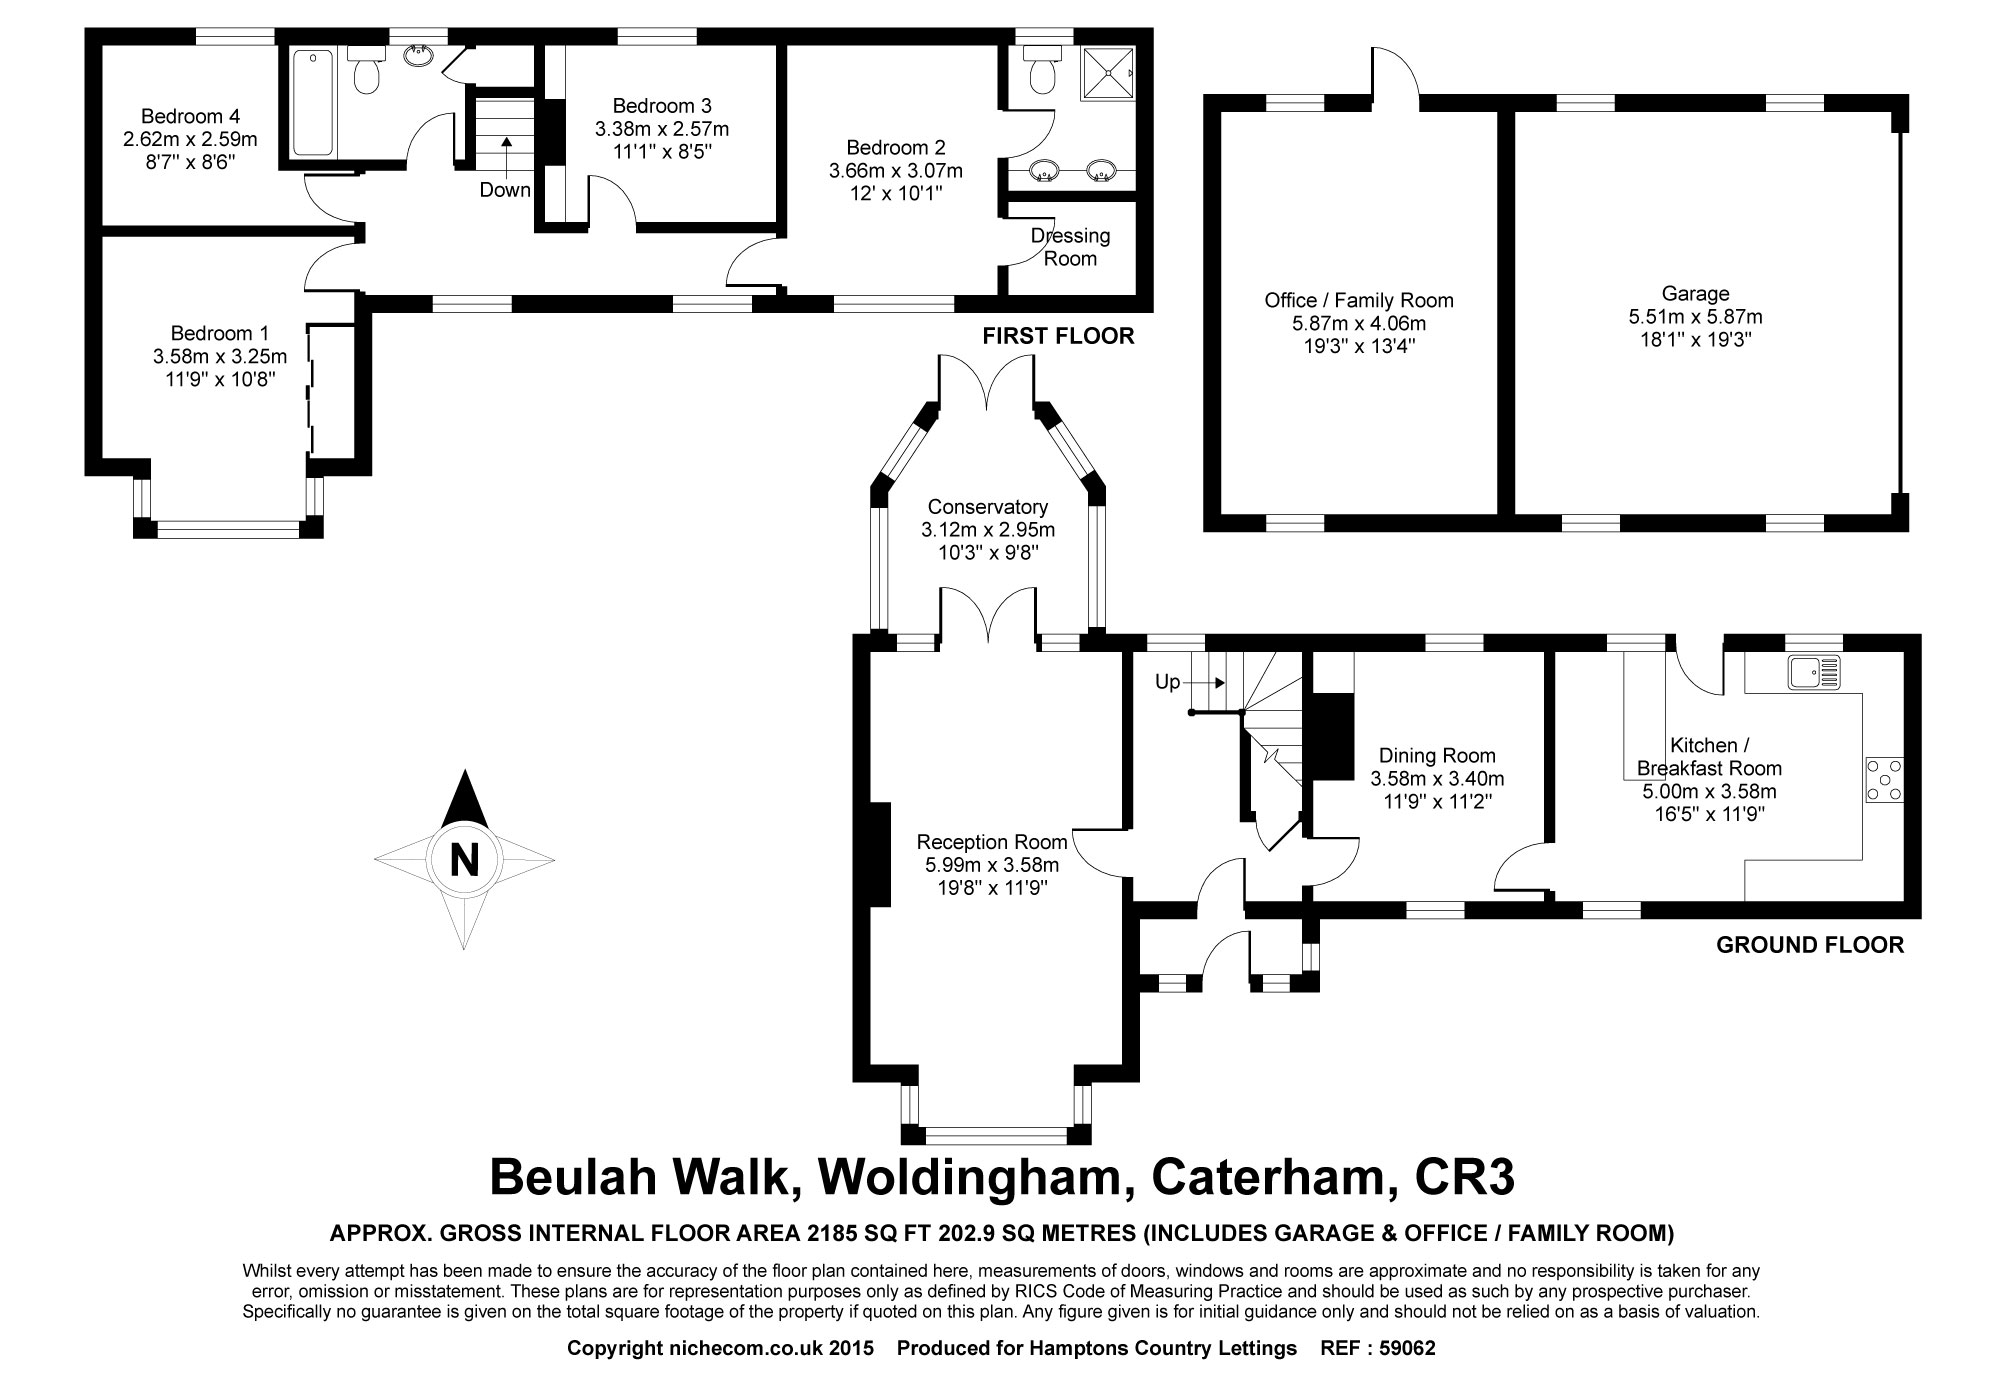 4 Bedrooms Detached house to rent in Beulah Walk, Woldingham, Caterham CR3